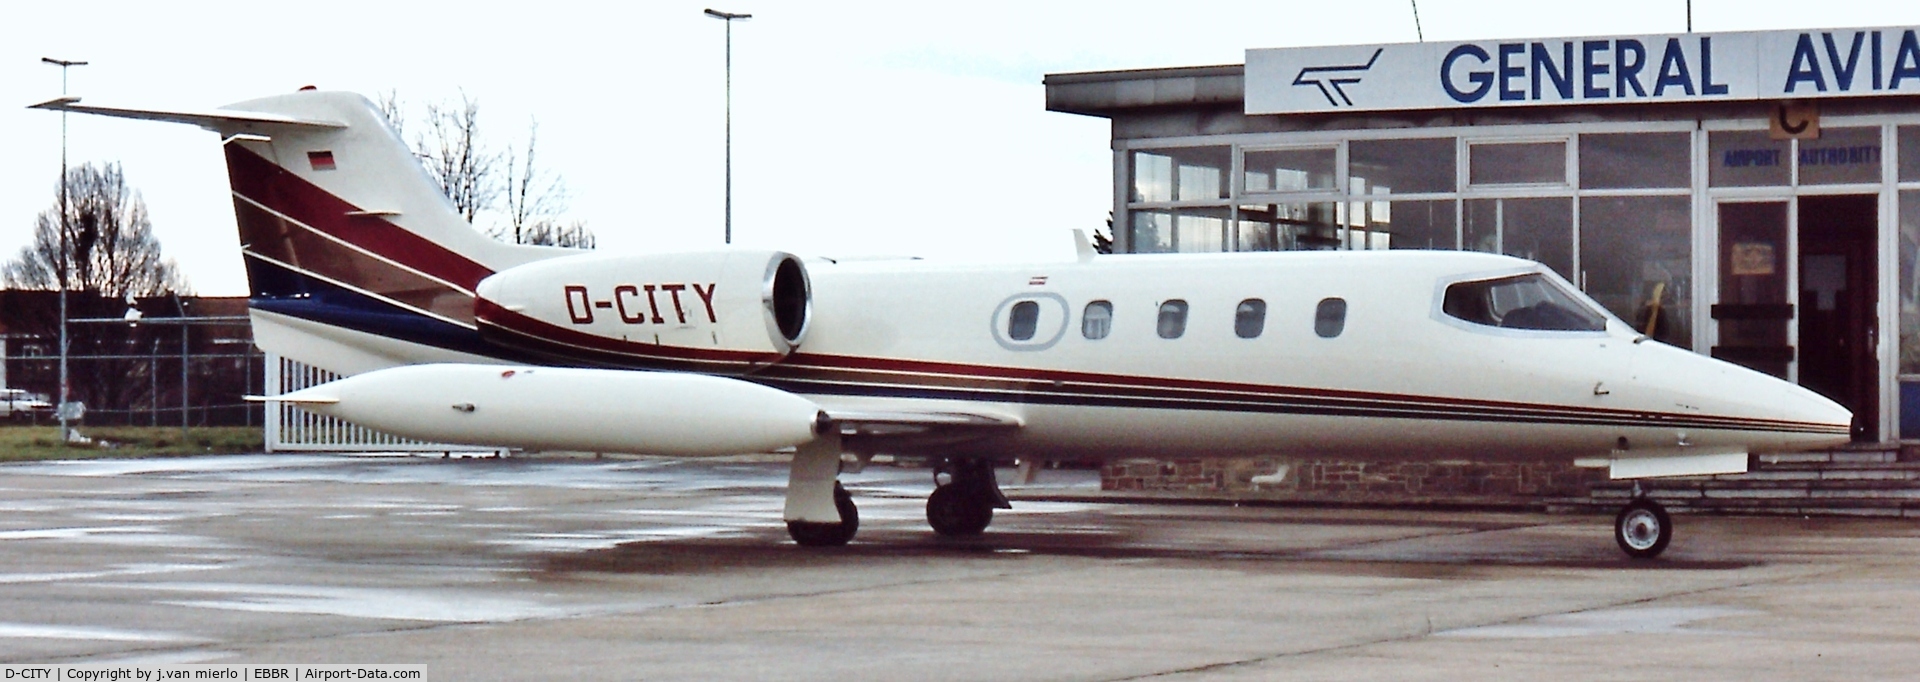 D-CITY, 1978 Gates Learjet 35A C/N 35A-177, Brussels G.A.T.